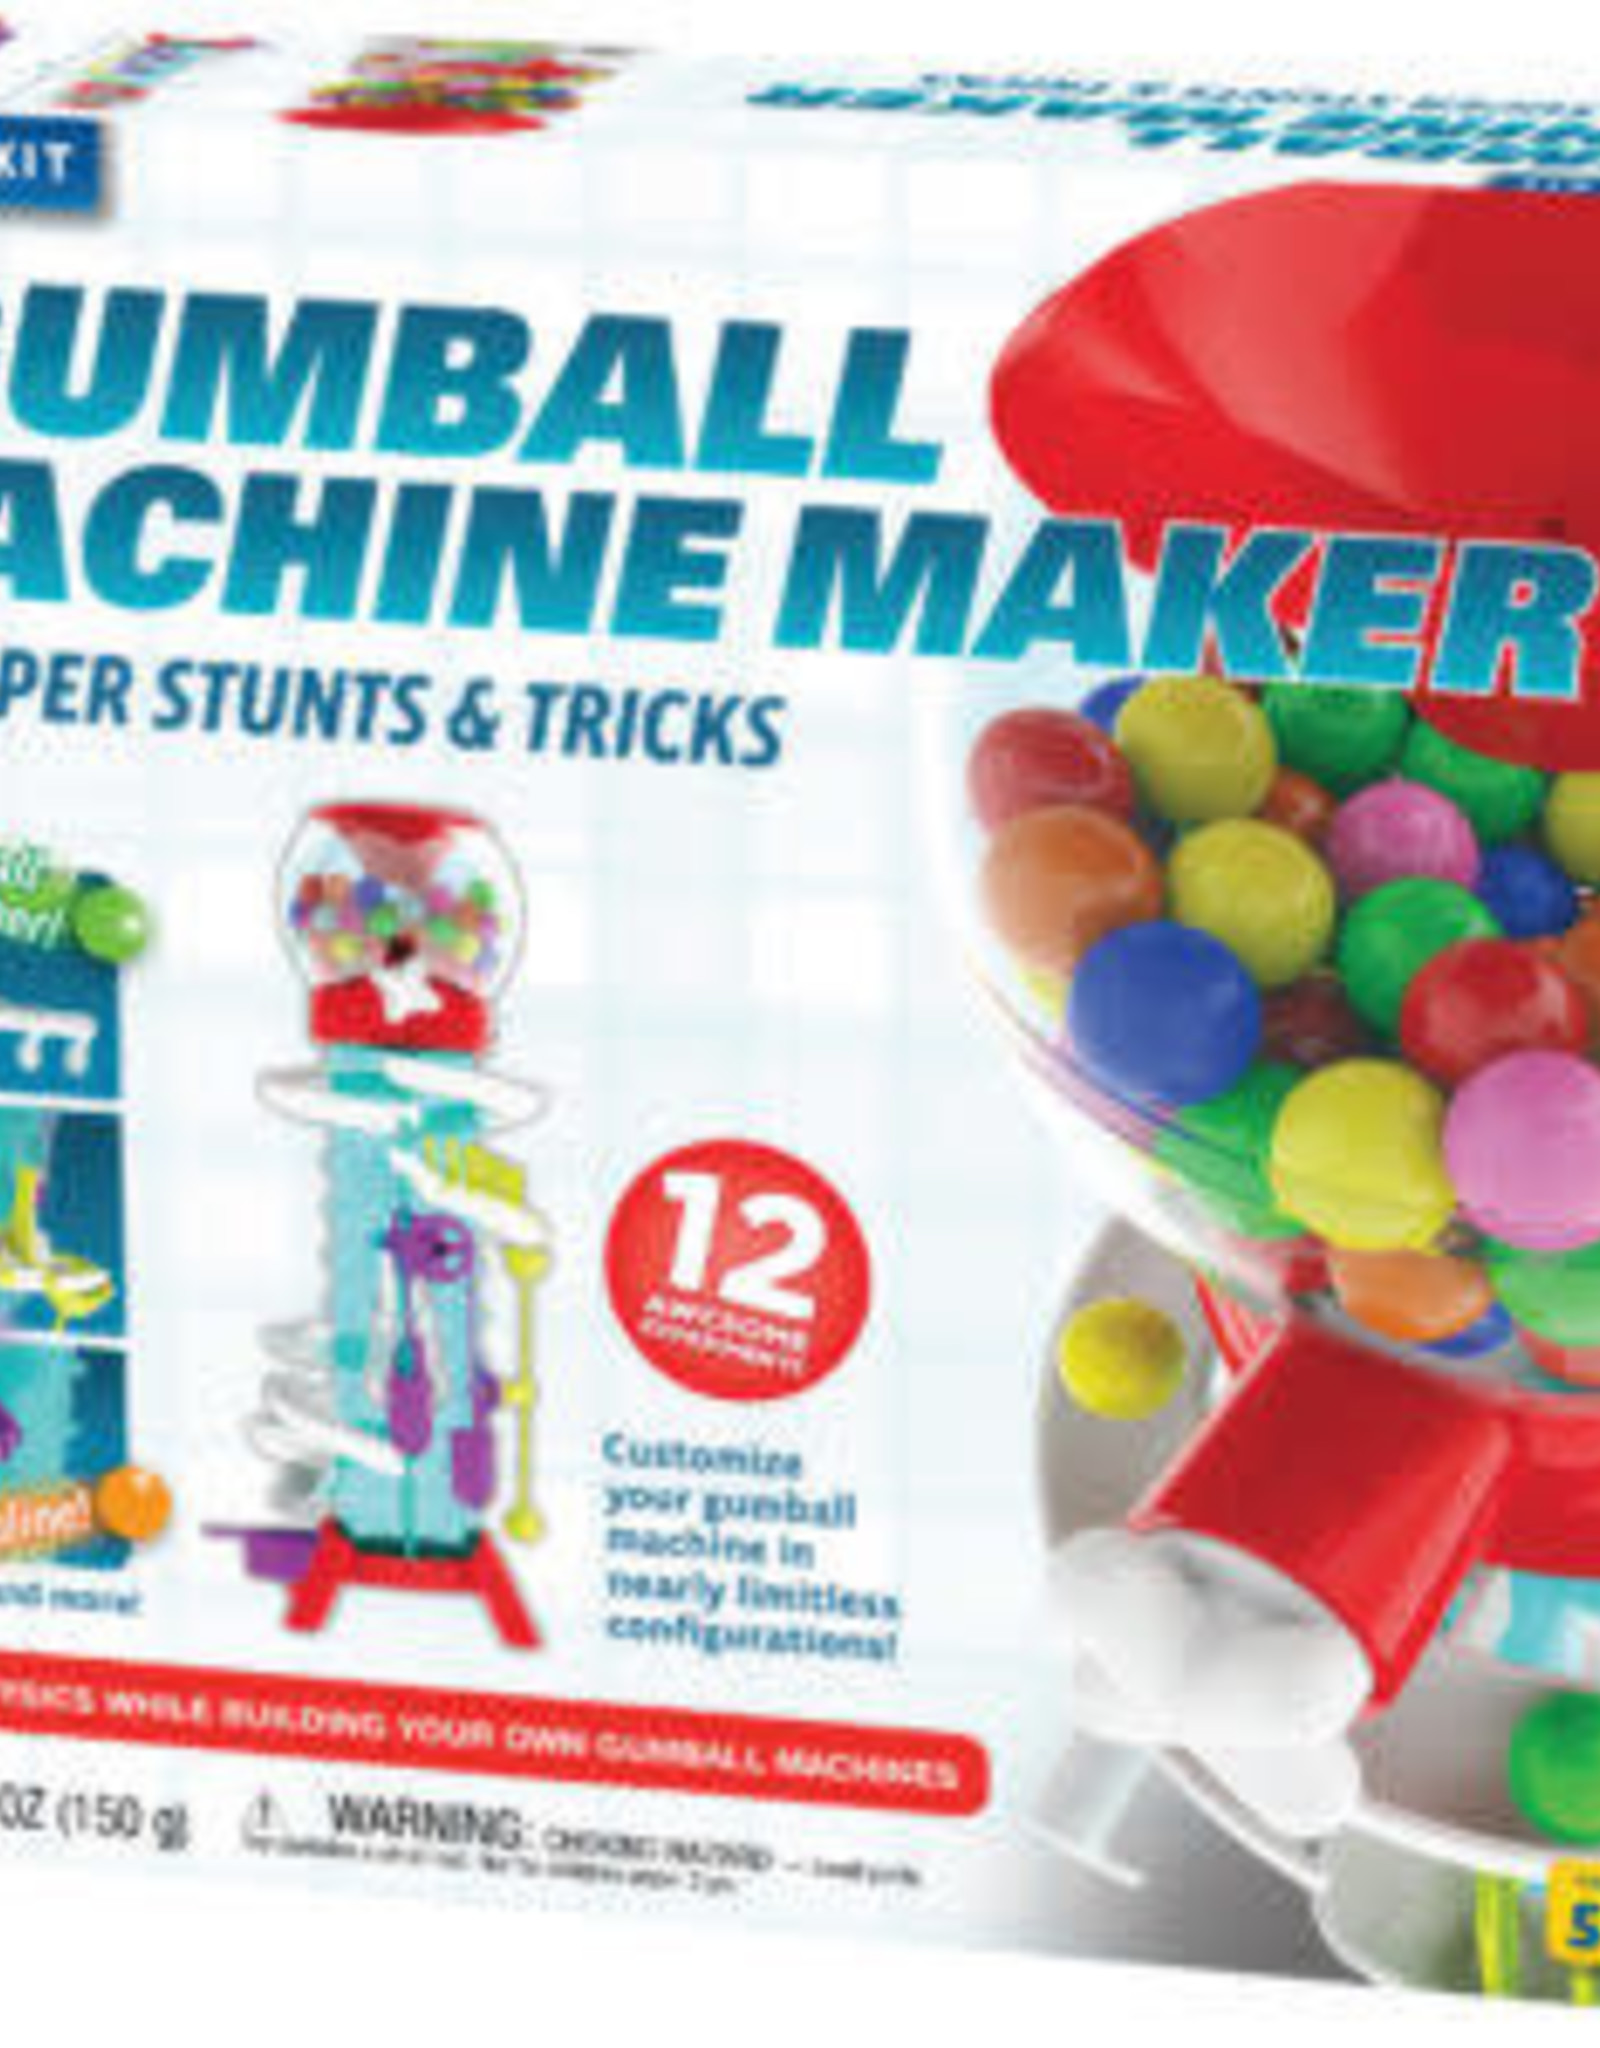 Thames & Kosmos Candy Vending Machine - Super Stunts and Tricks